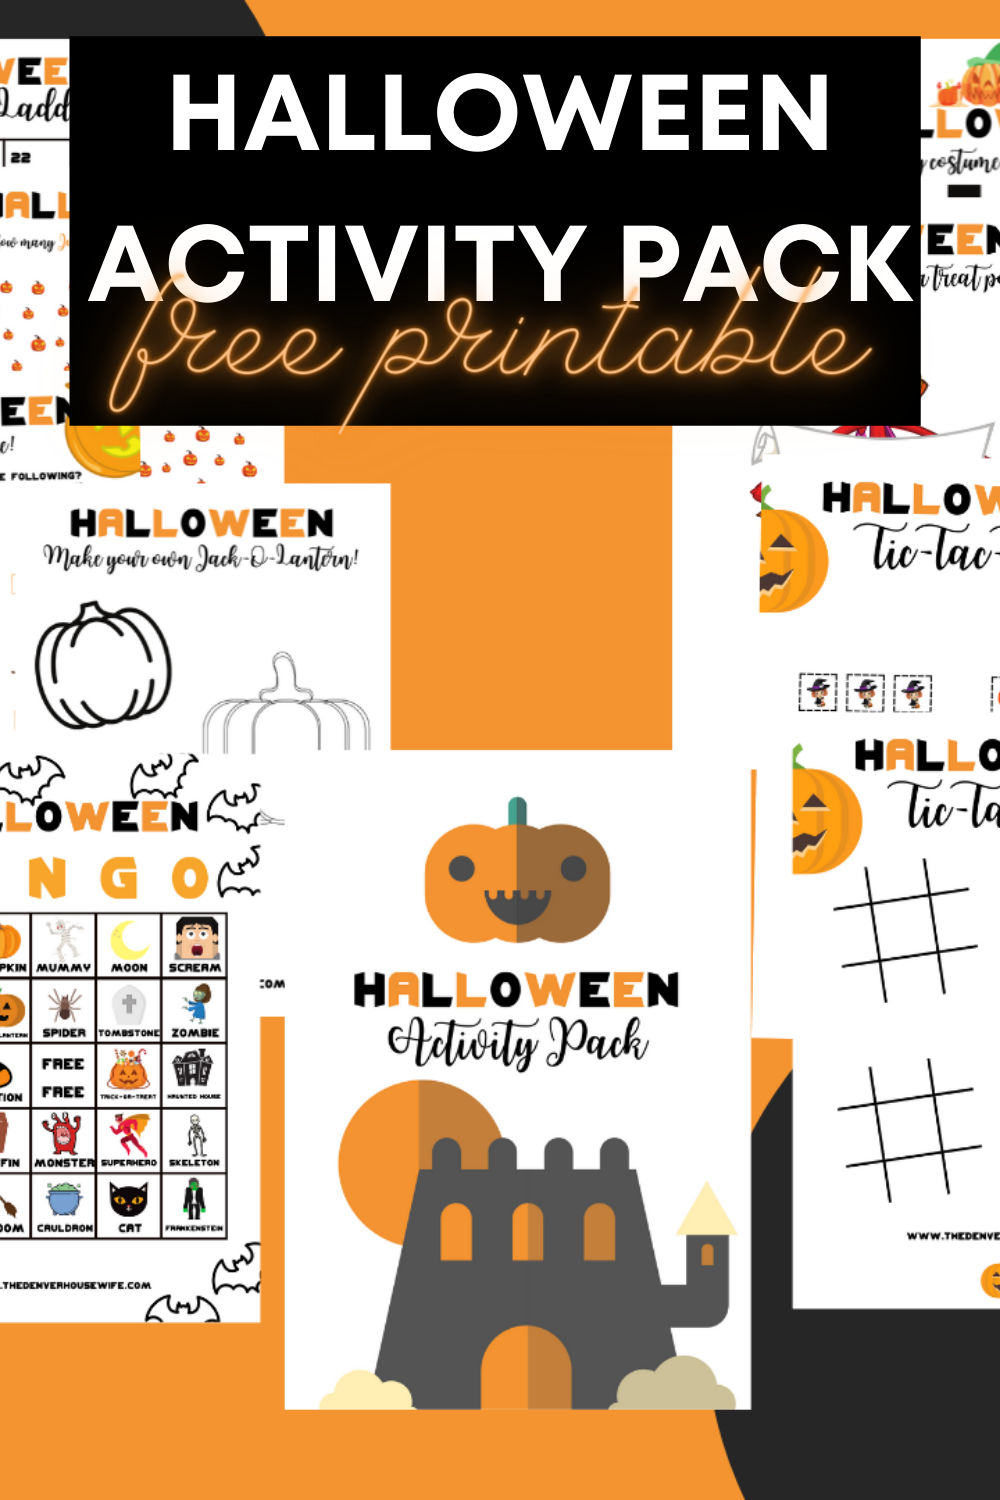 Halloween Activity Pack Free Printable